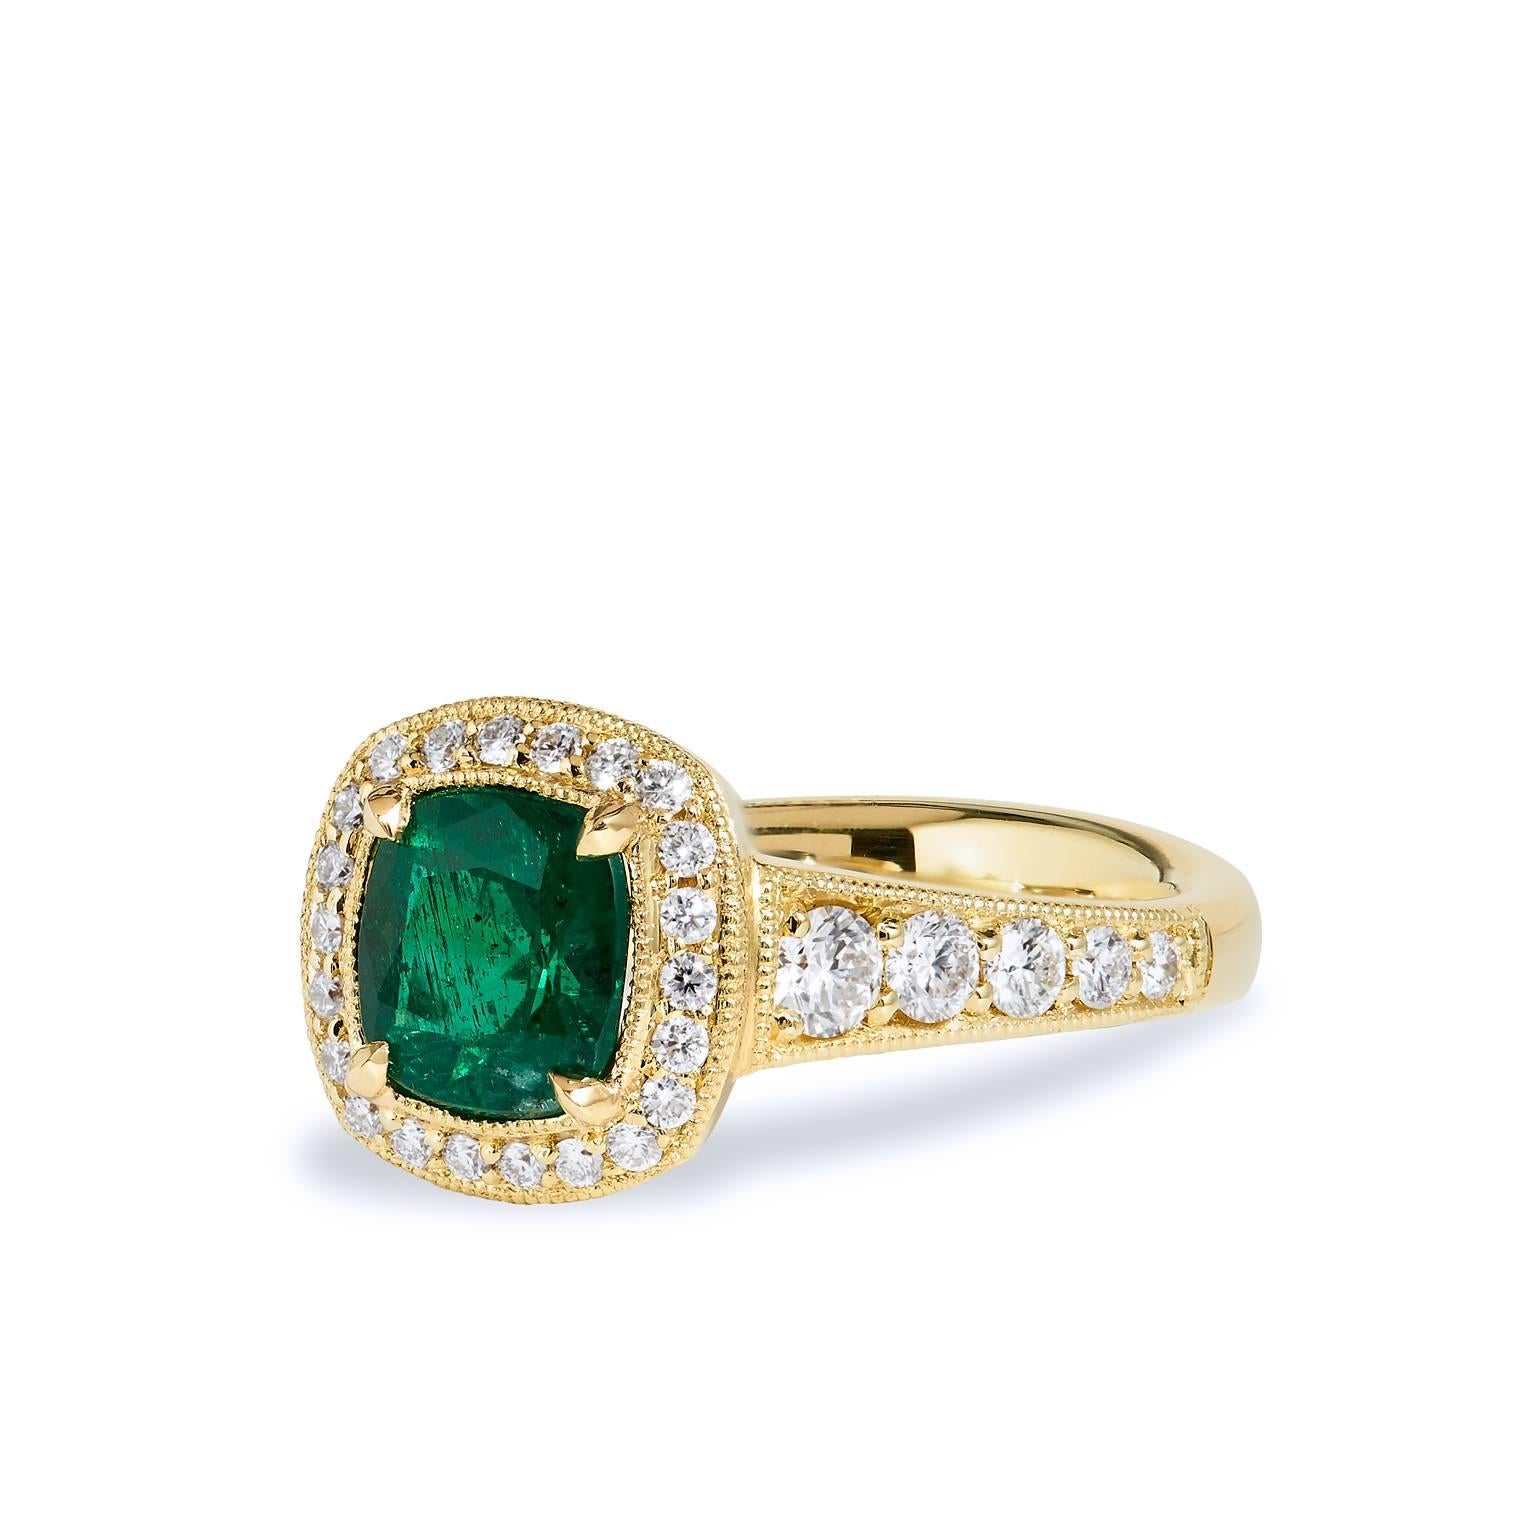 Emerald Cut GIA Certified 1.18 Carat No Treatment Zambian Emerald and Diamond Halo Ring